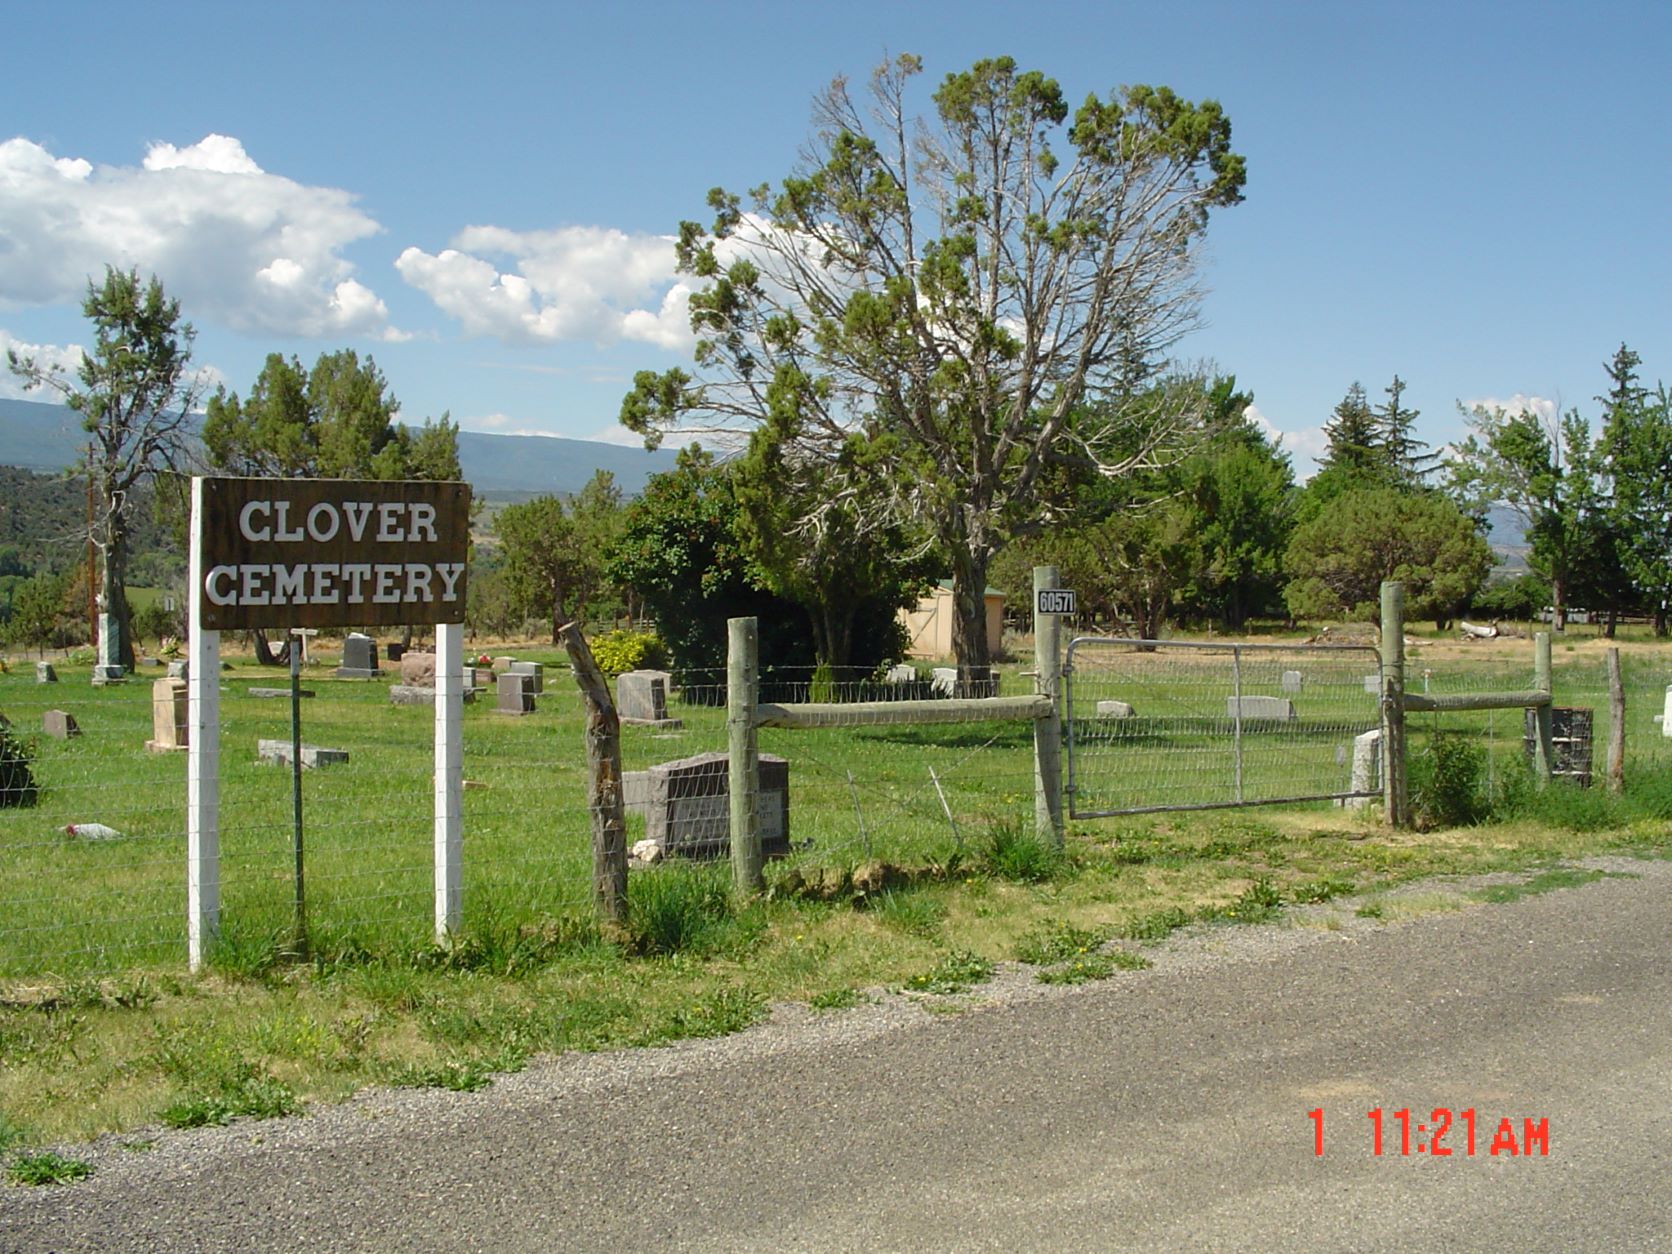 Clover Cemetery